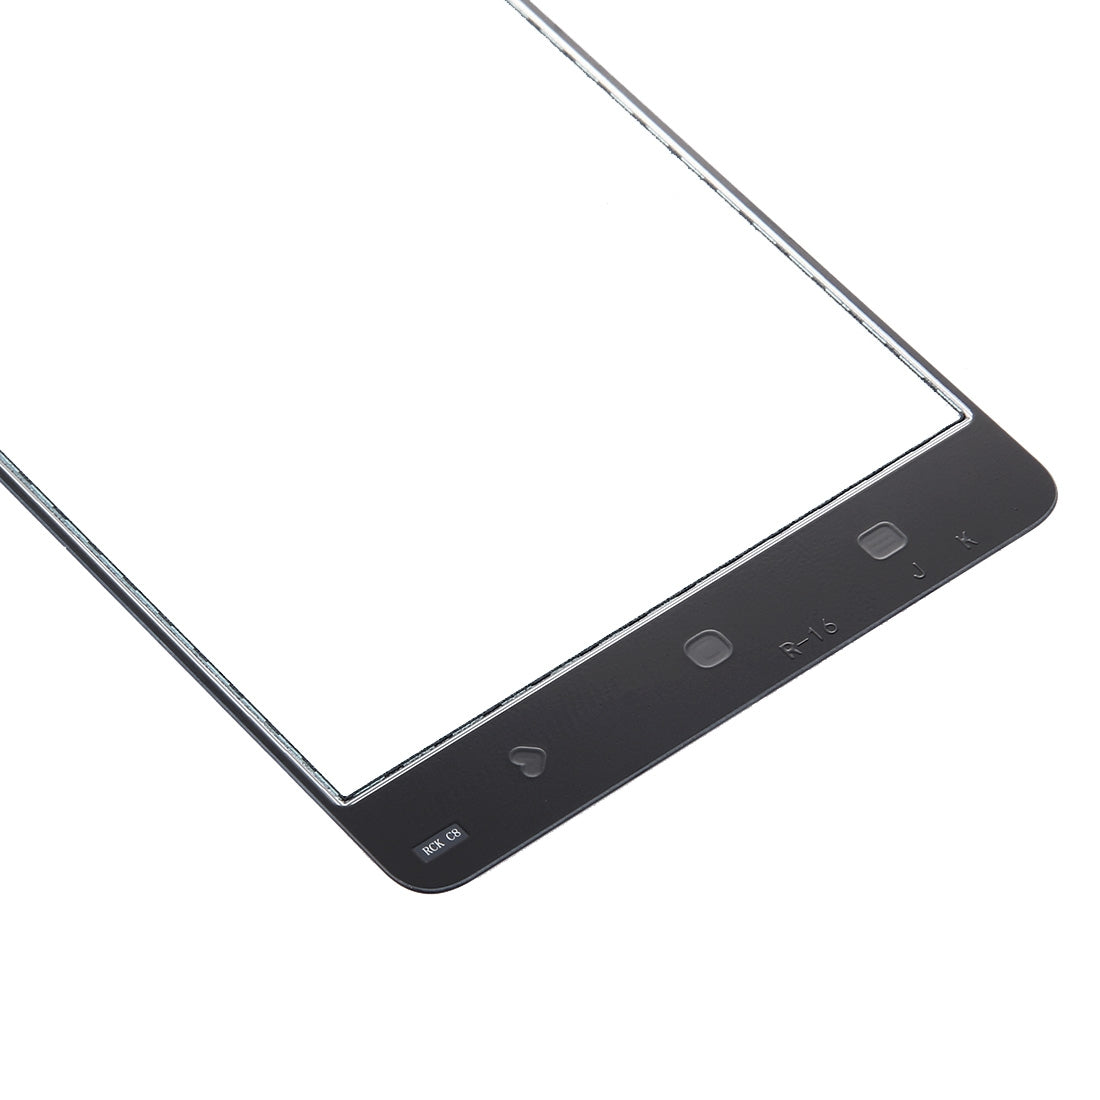 Touch Screen Digitizer Xiaomi Mi 4c / 4i Black